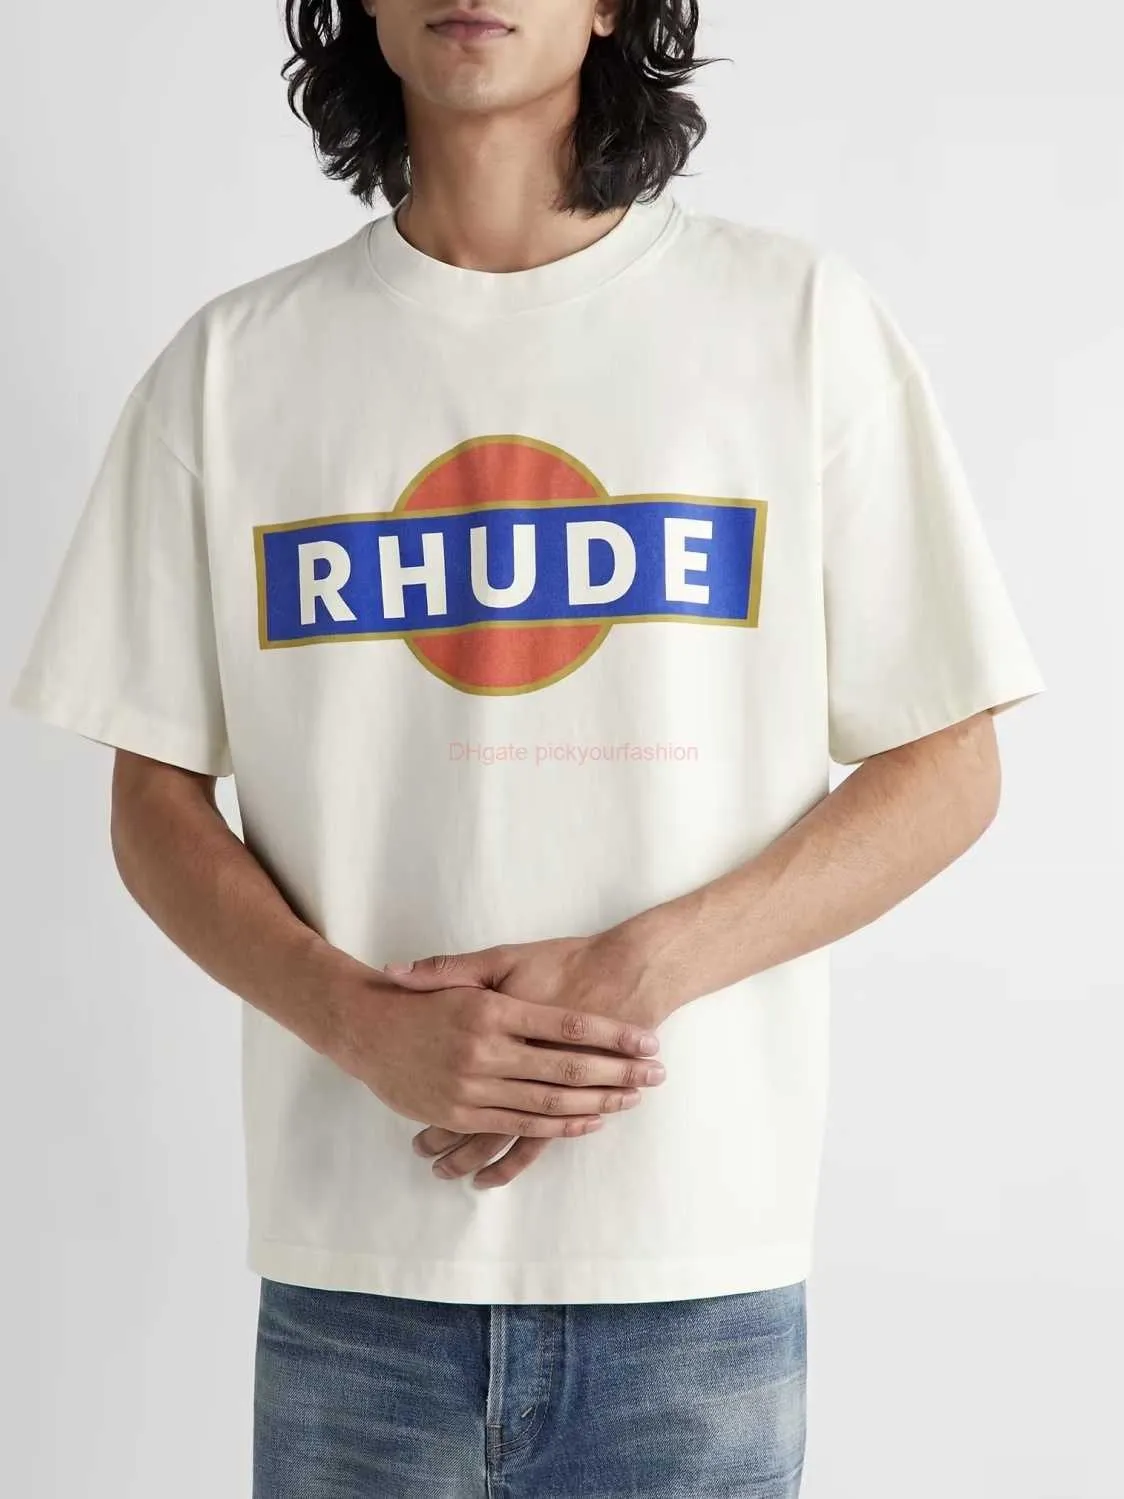 Designer Fashion Clothing Tees Tshirt H8016#rhude Summer Vintage Racer  Short Sleeve T-shirt Cotton Streetwear Tops Casual Sportswear Rock Hip hop  for